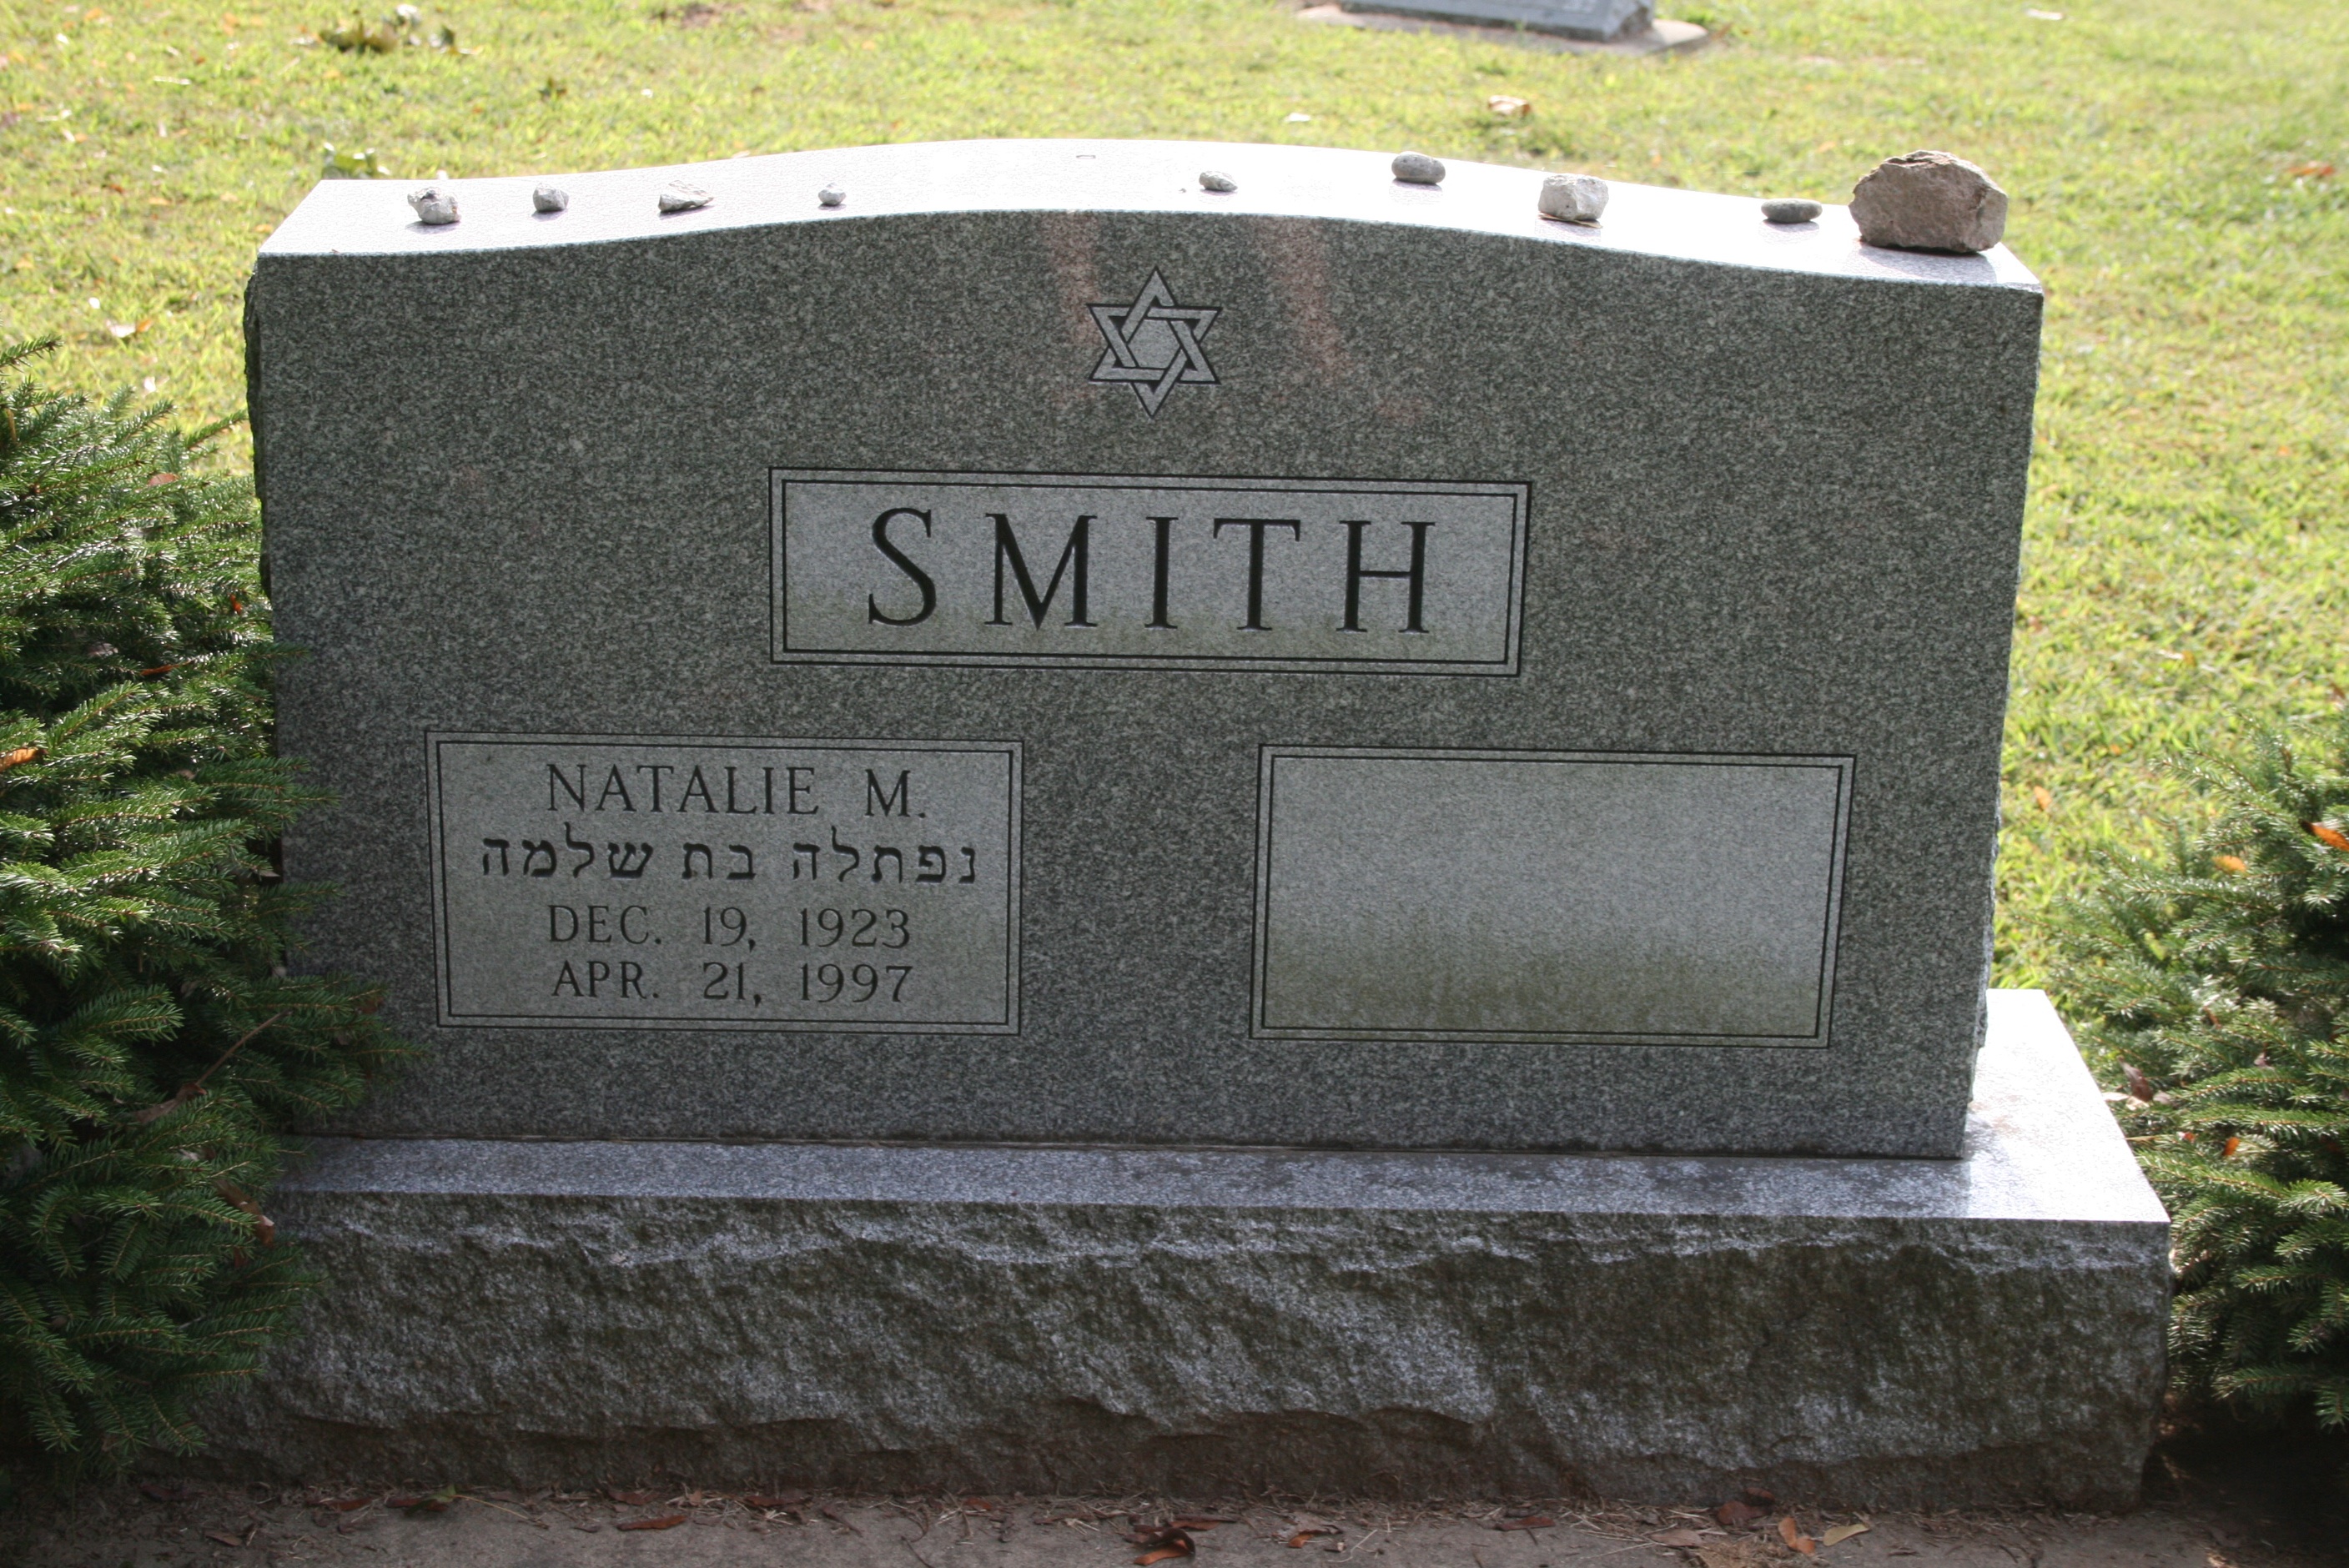 Smith, Natalie M.